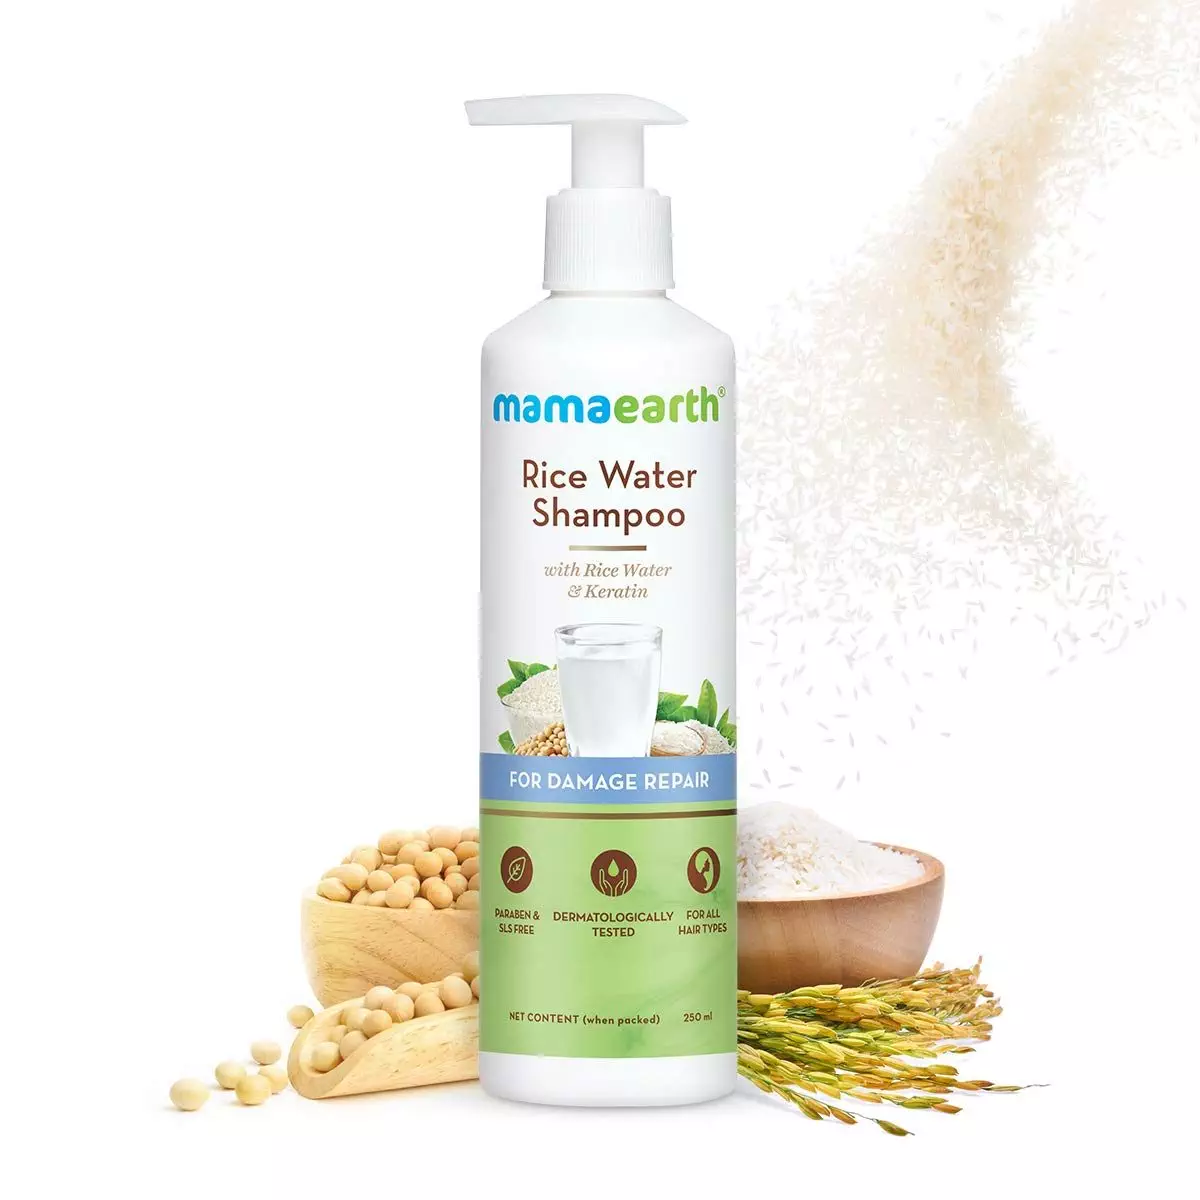 Mamaearth Rice Water Shampoo Review 12